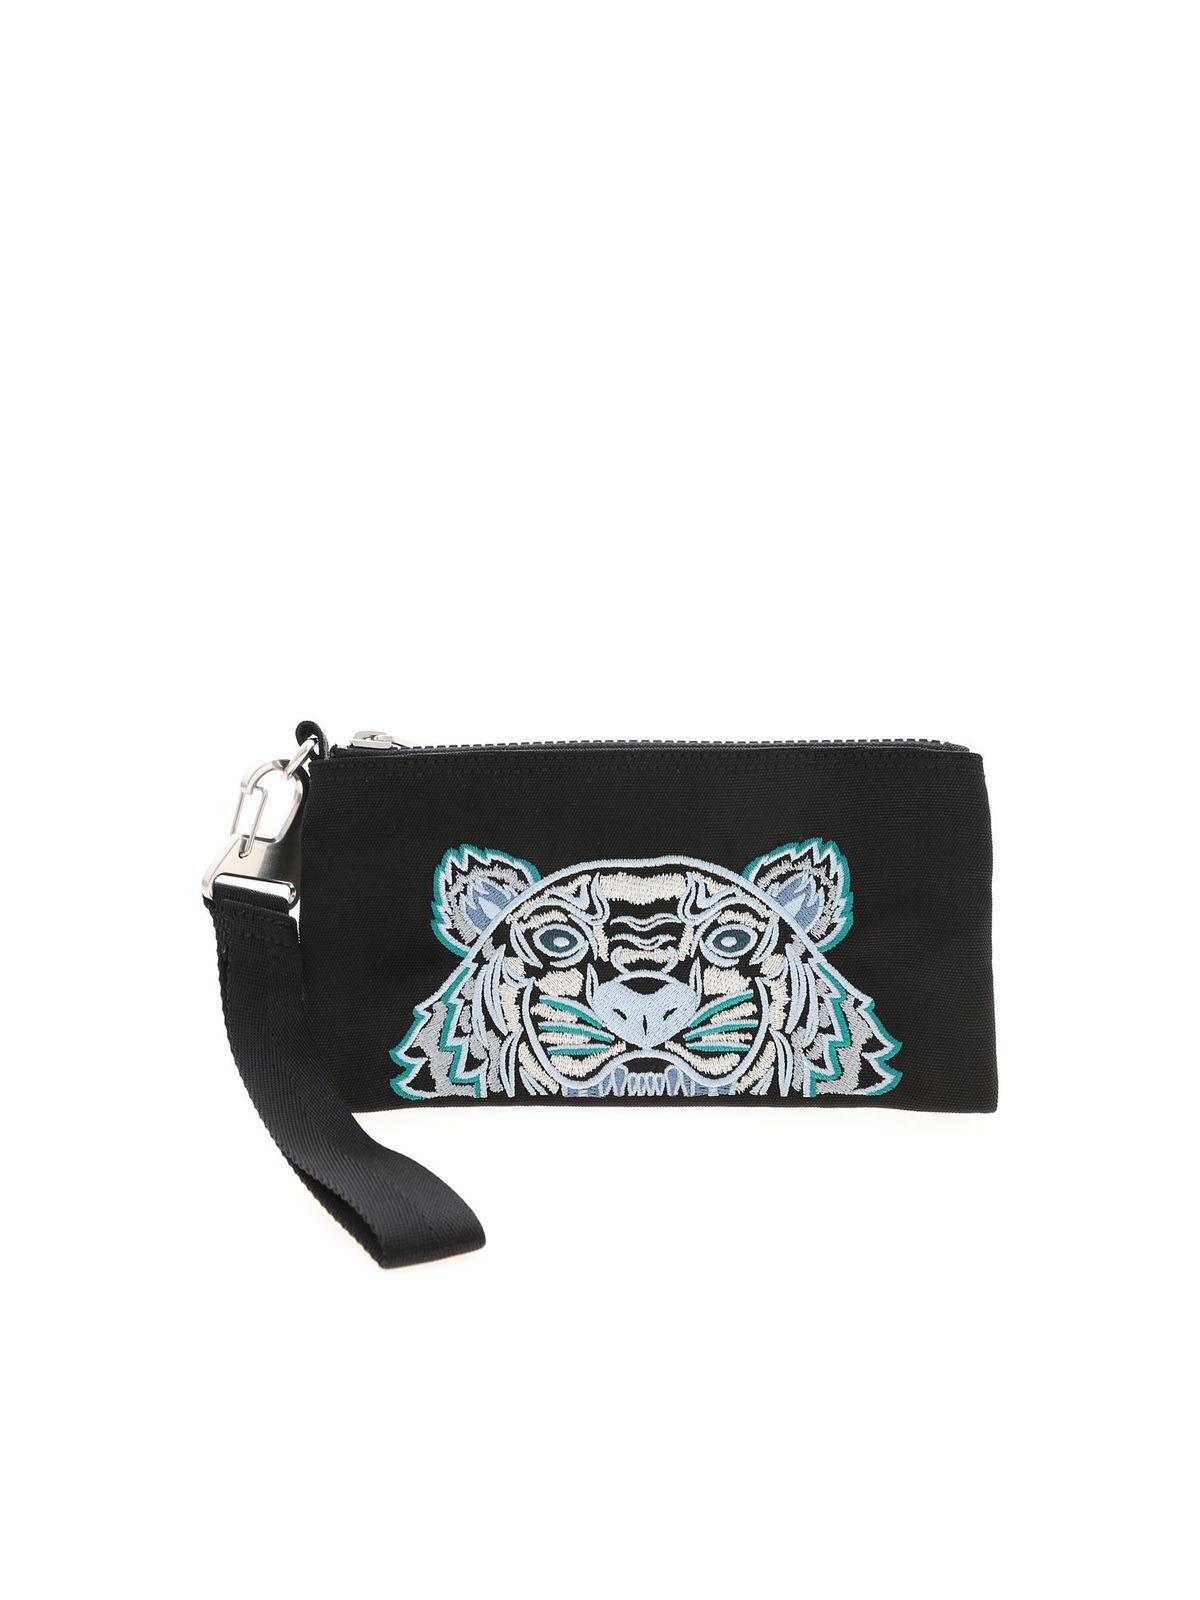 Kenzo - Tiger logo embroidery clutch bag in black - clutches - 5PM313F2099E